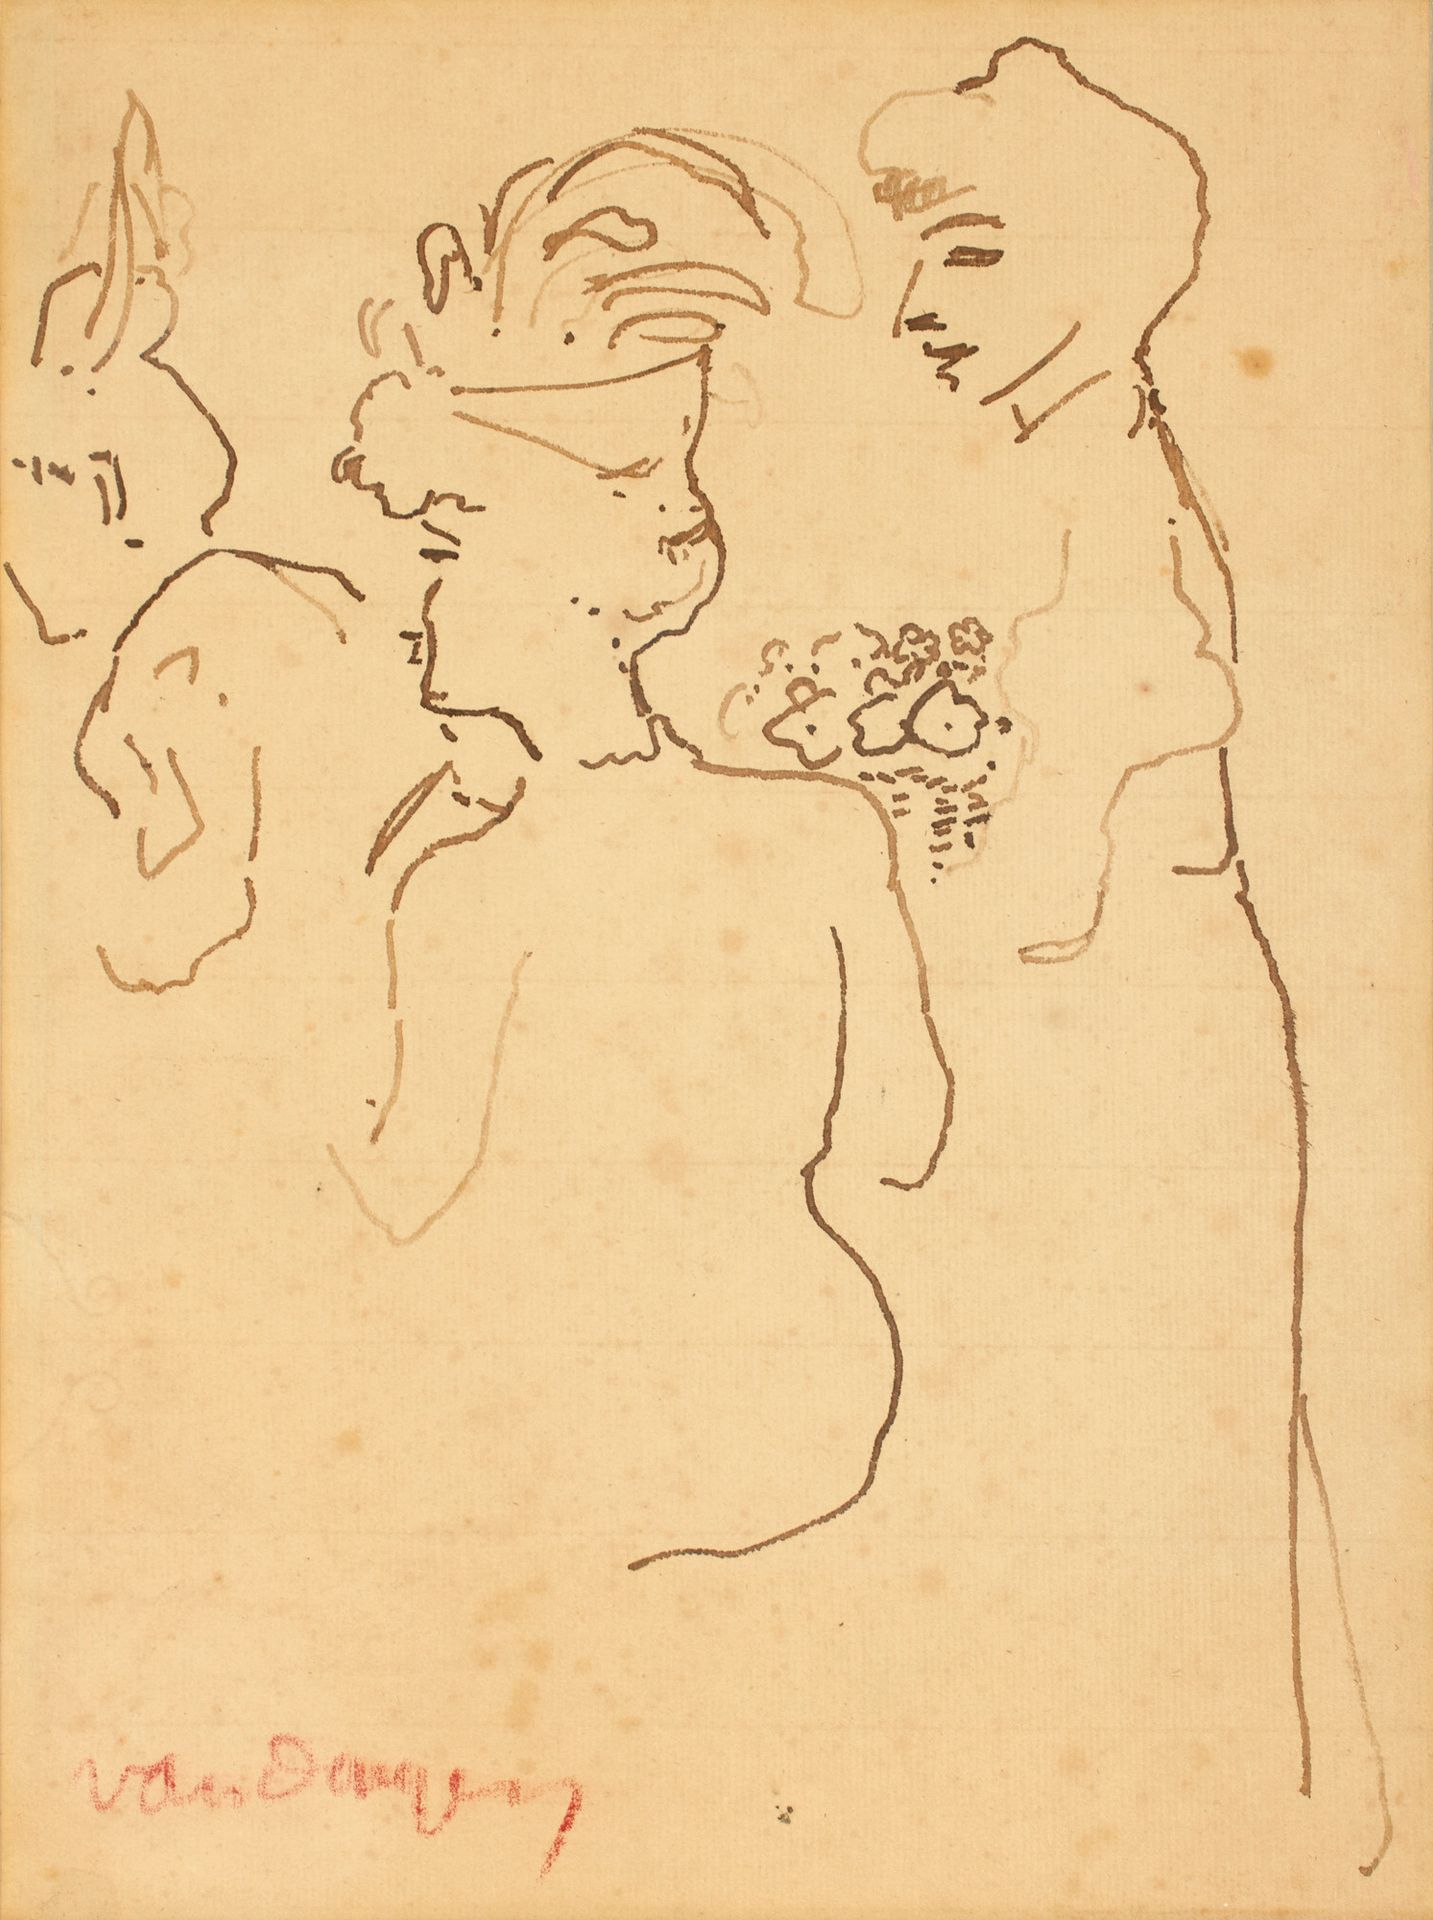 Kees VAN DONGEN (1877-1968) 基斯-范东根(1877-1968)

三个女人

水墨画，左下方有炭笔签名

29,5 x 22 cm
&hellip;